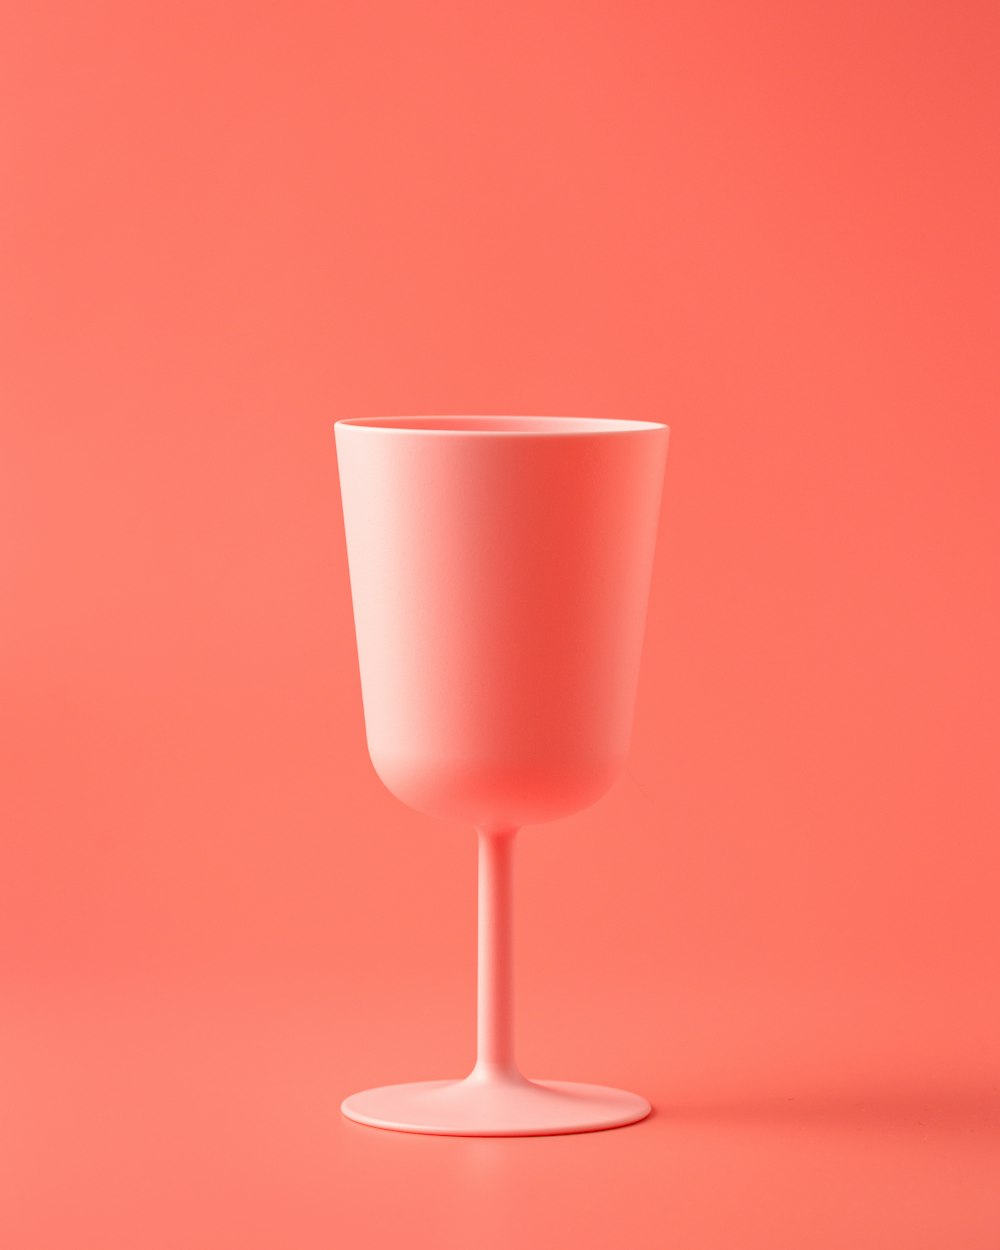 Foto de la taza rosa